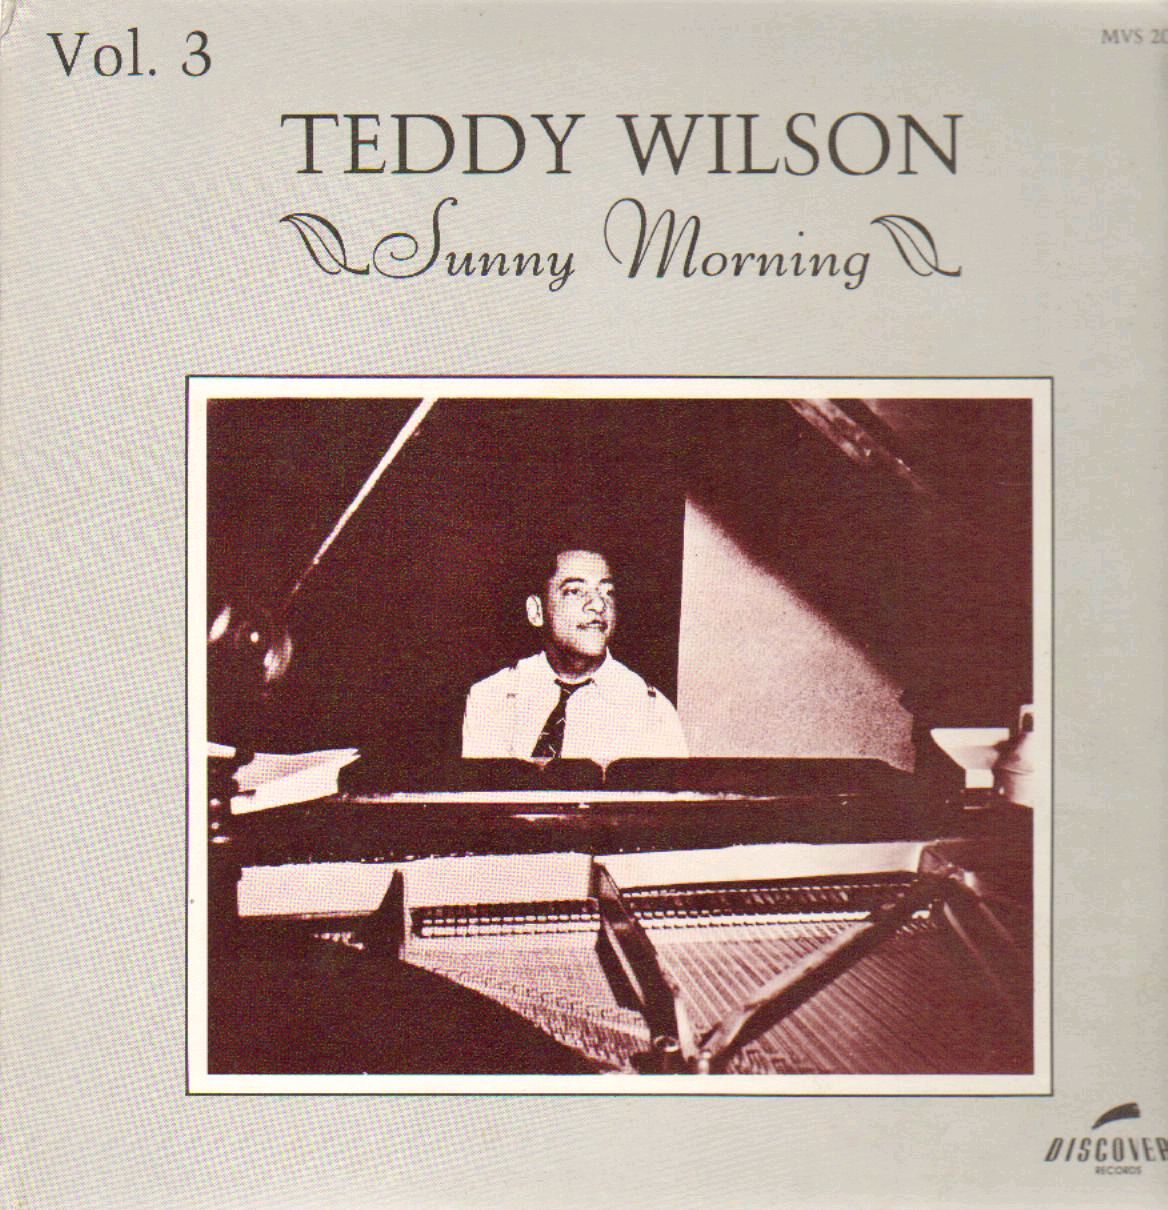 TEDDY WILSON - Sunny Morning Vol. 3 cover 